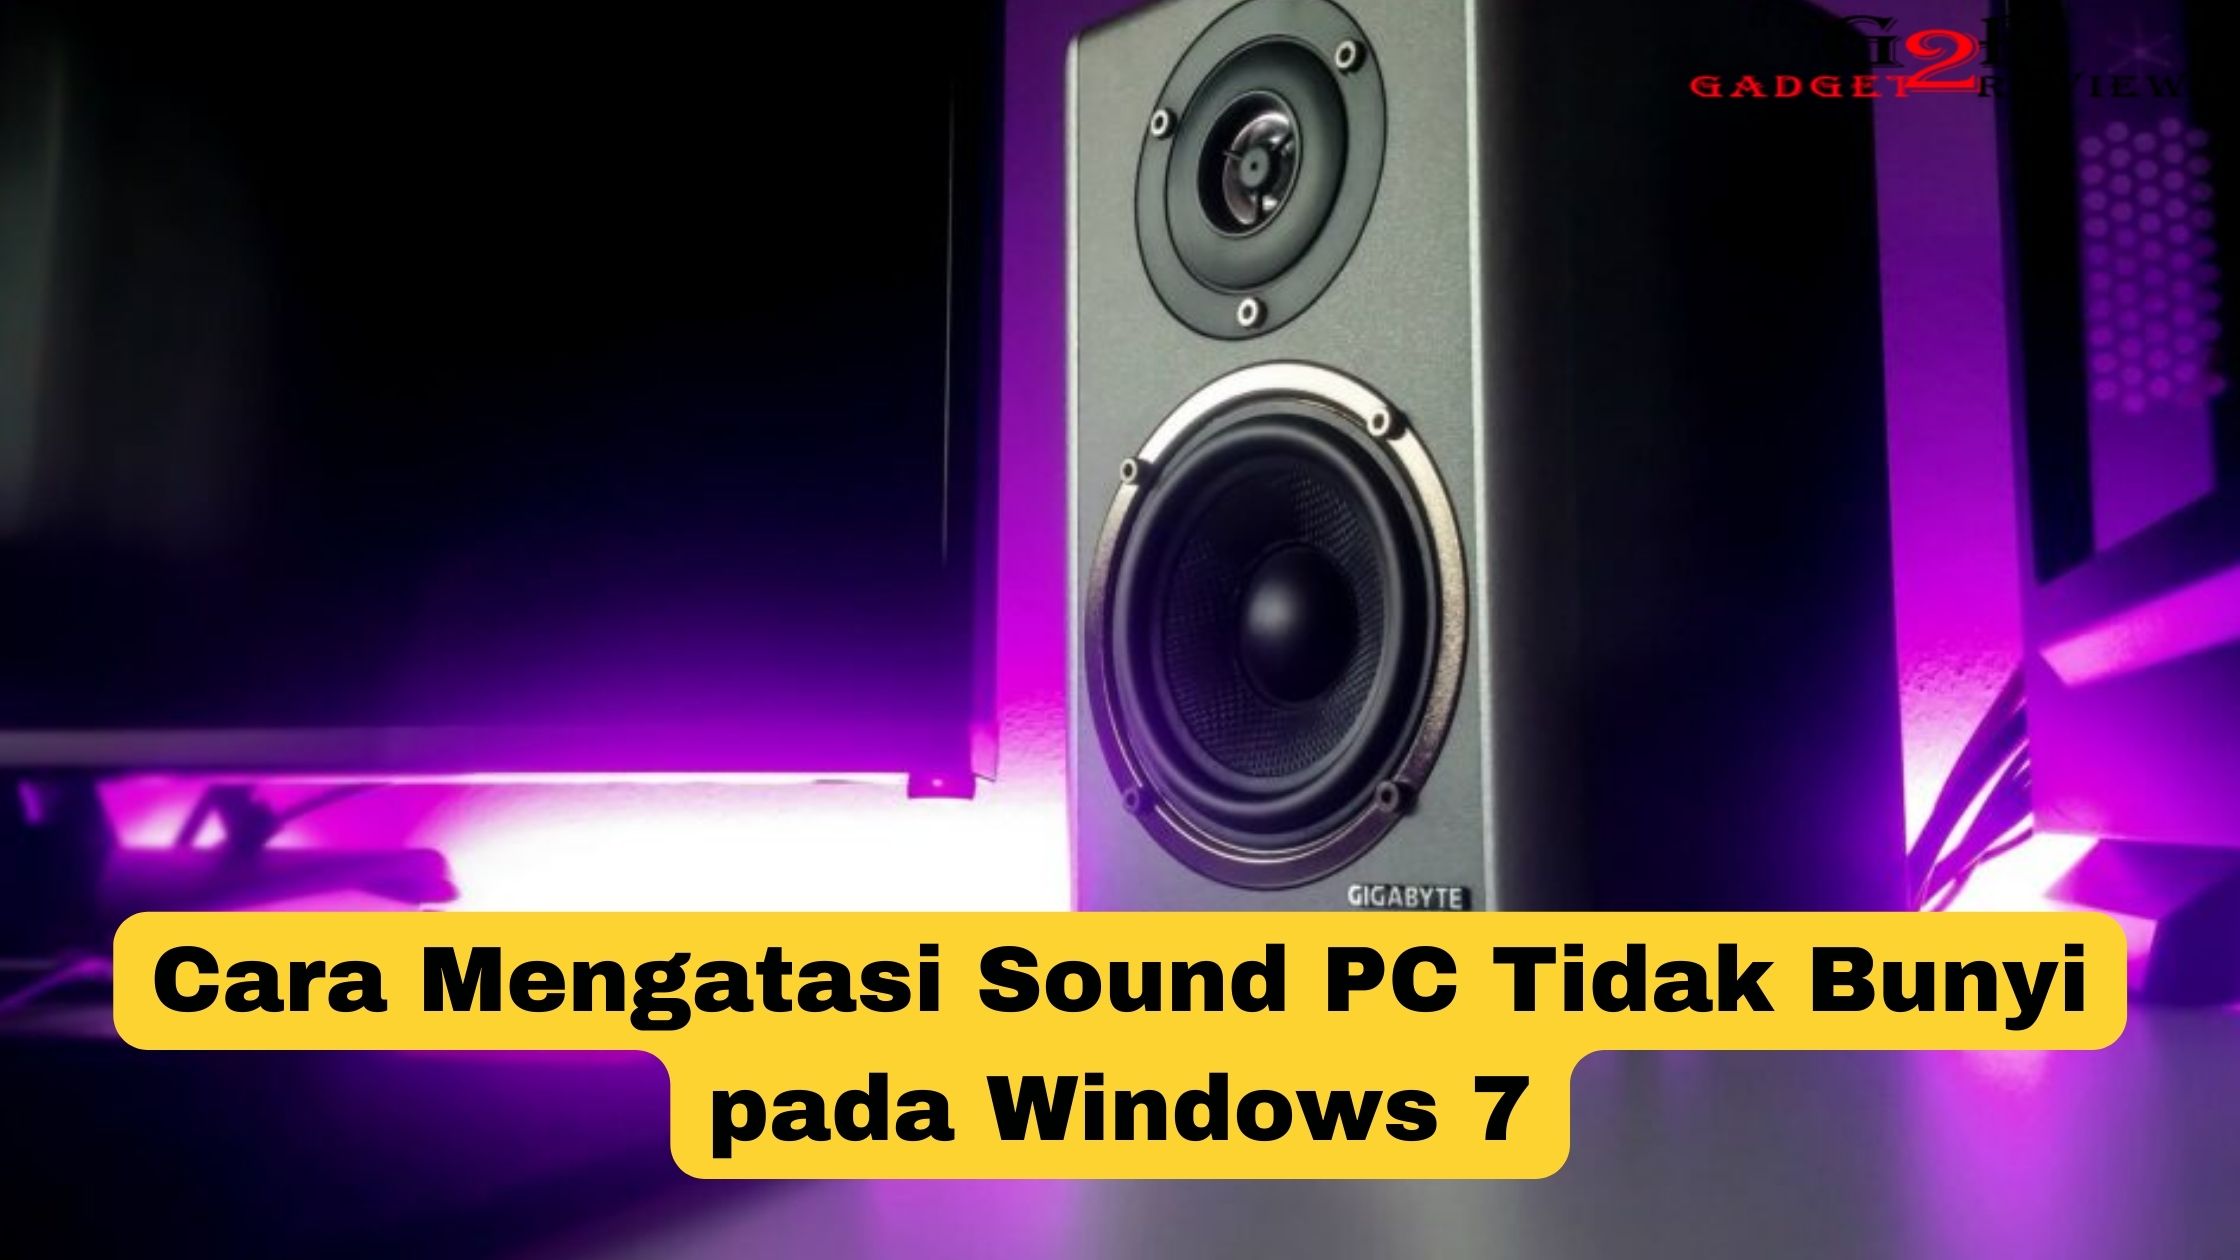 Cara Mengatasi Sound PC Tidak Bunyi pada Windows 7